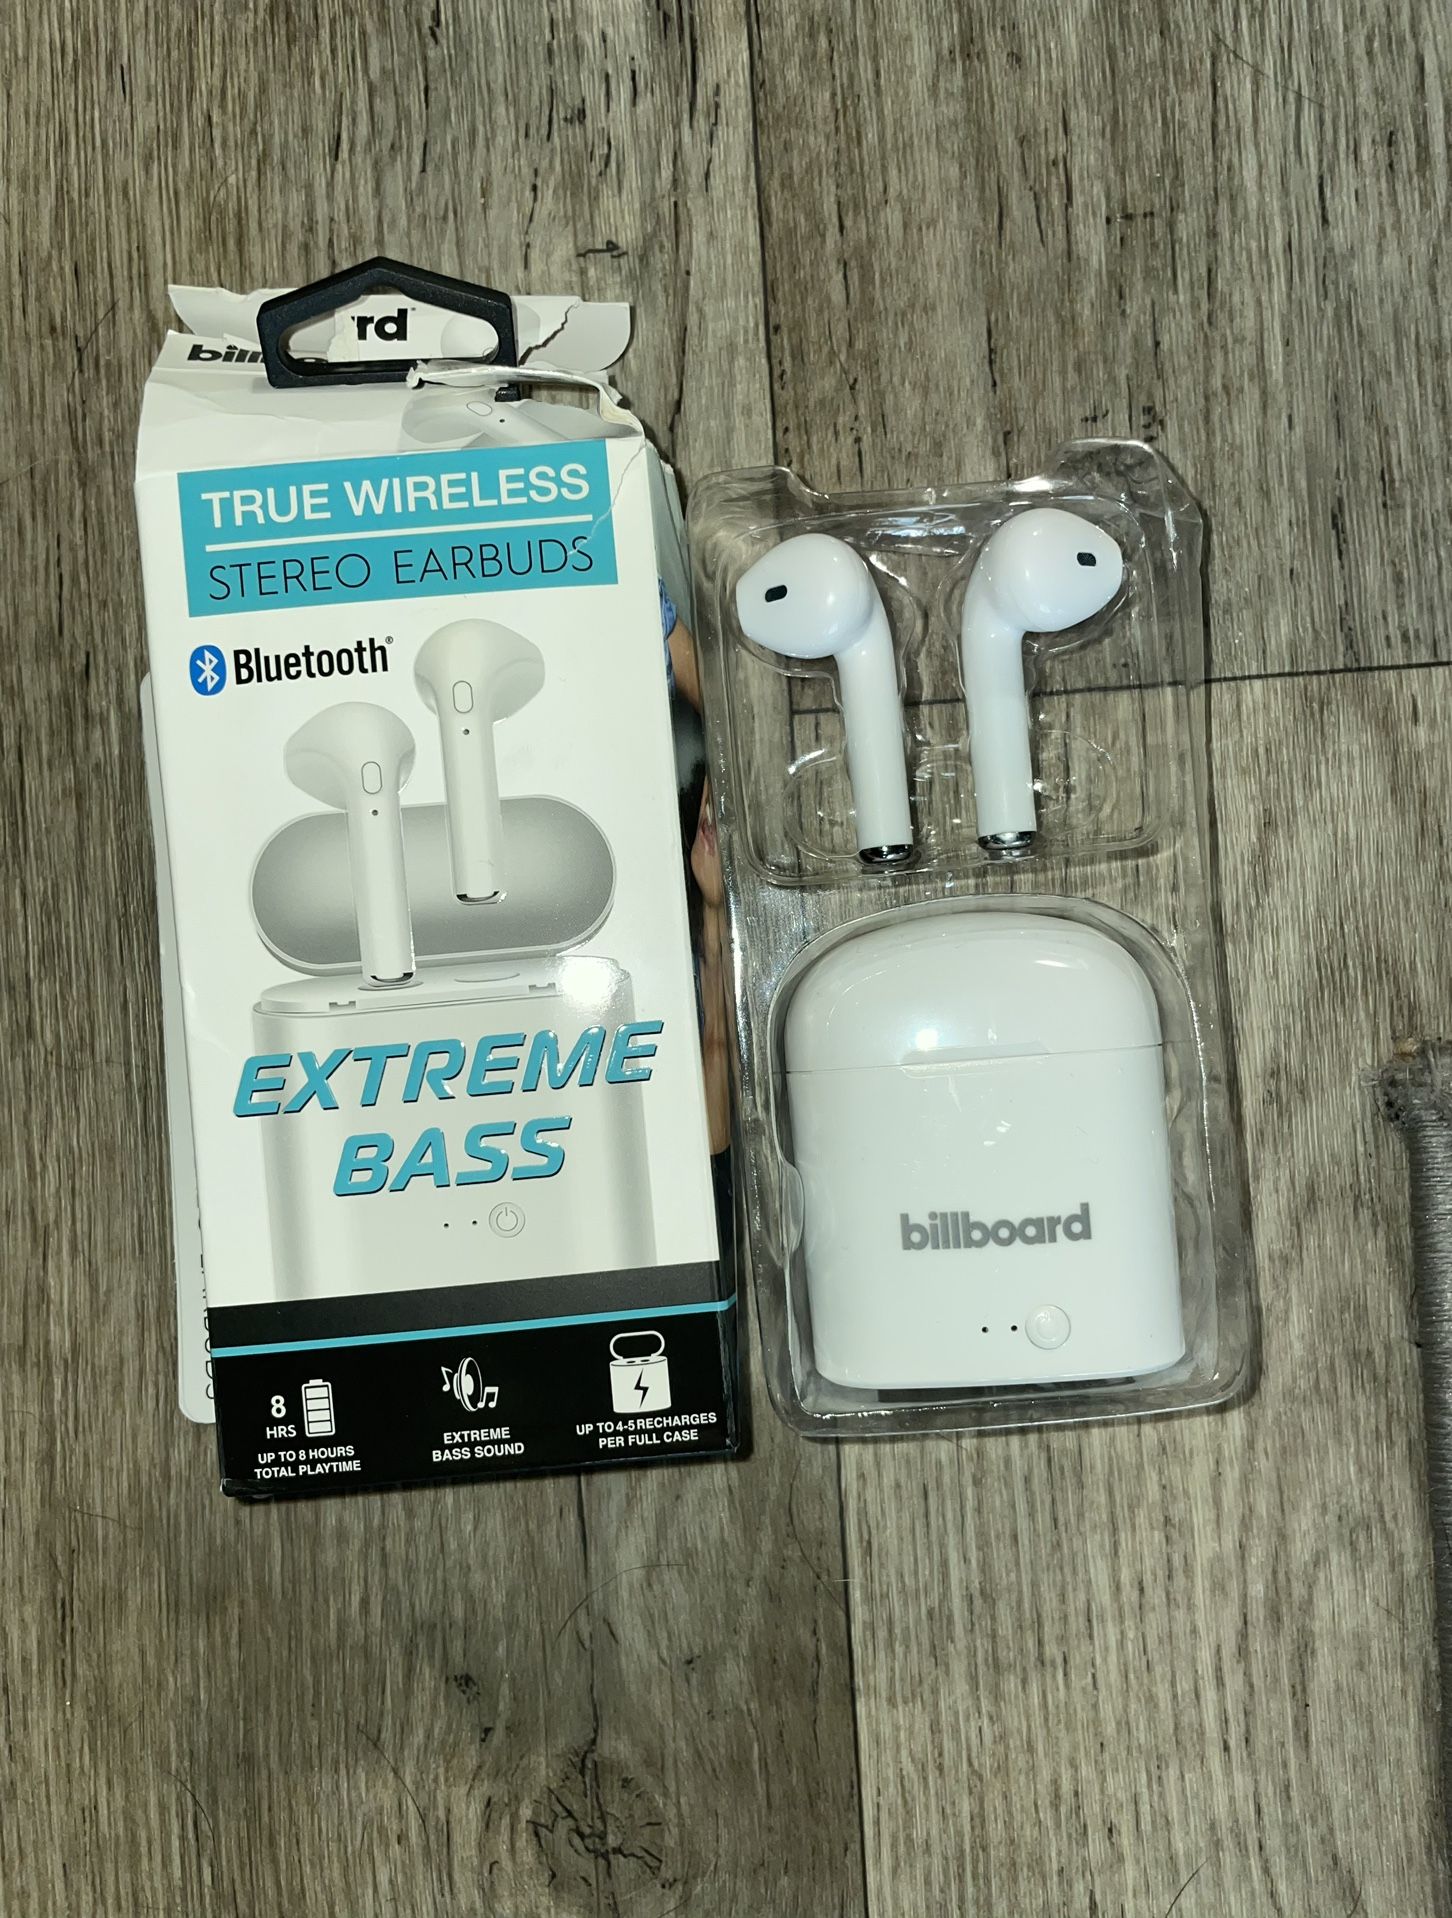 Billboard Bluetooth True Wireless Extreme Bass Earbuds Model BB1834 headphones